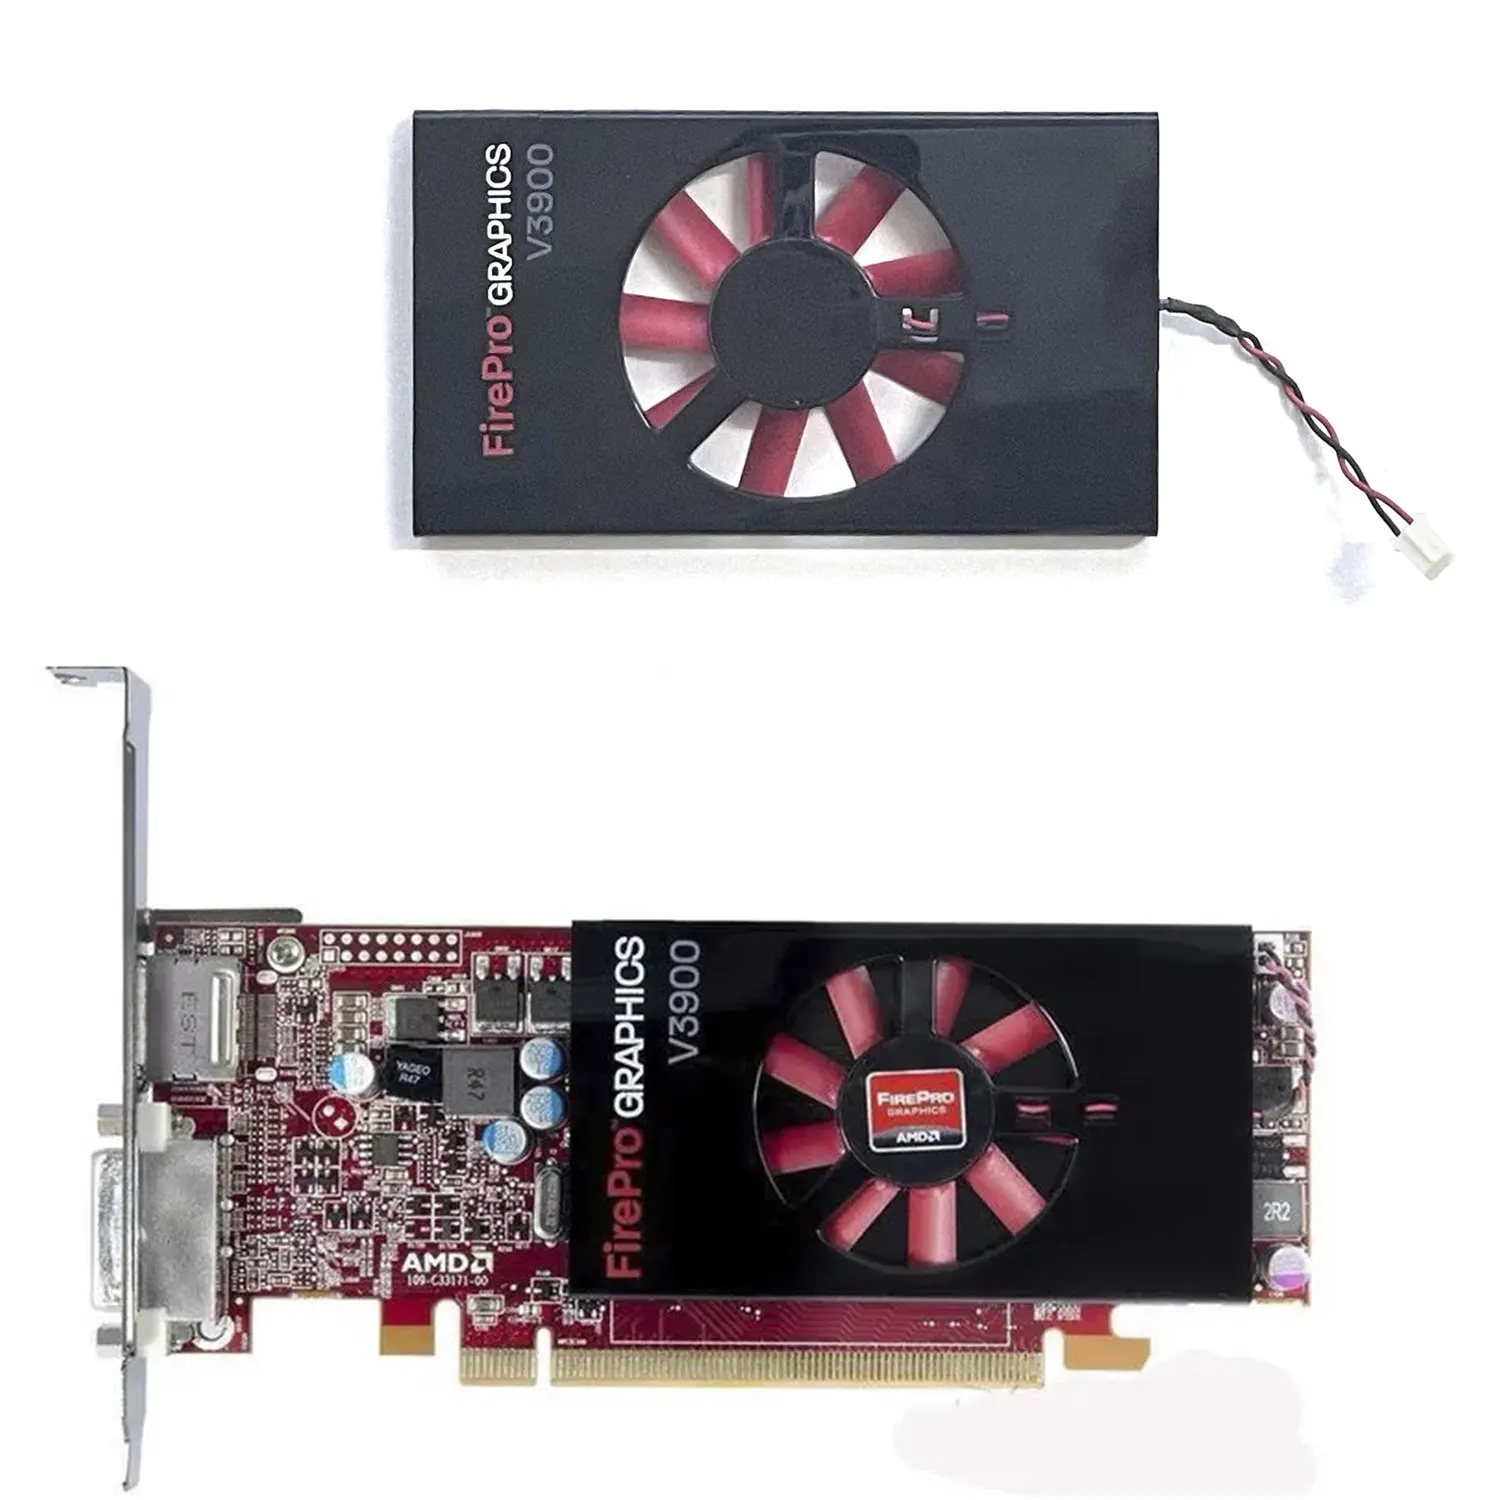 

New Original PLA05010S12M-2 2PIN DC 12V 0.2A GPU Fan for AMD/Sapphire Fire Pro V3900 Graphics Card Fan